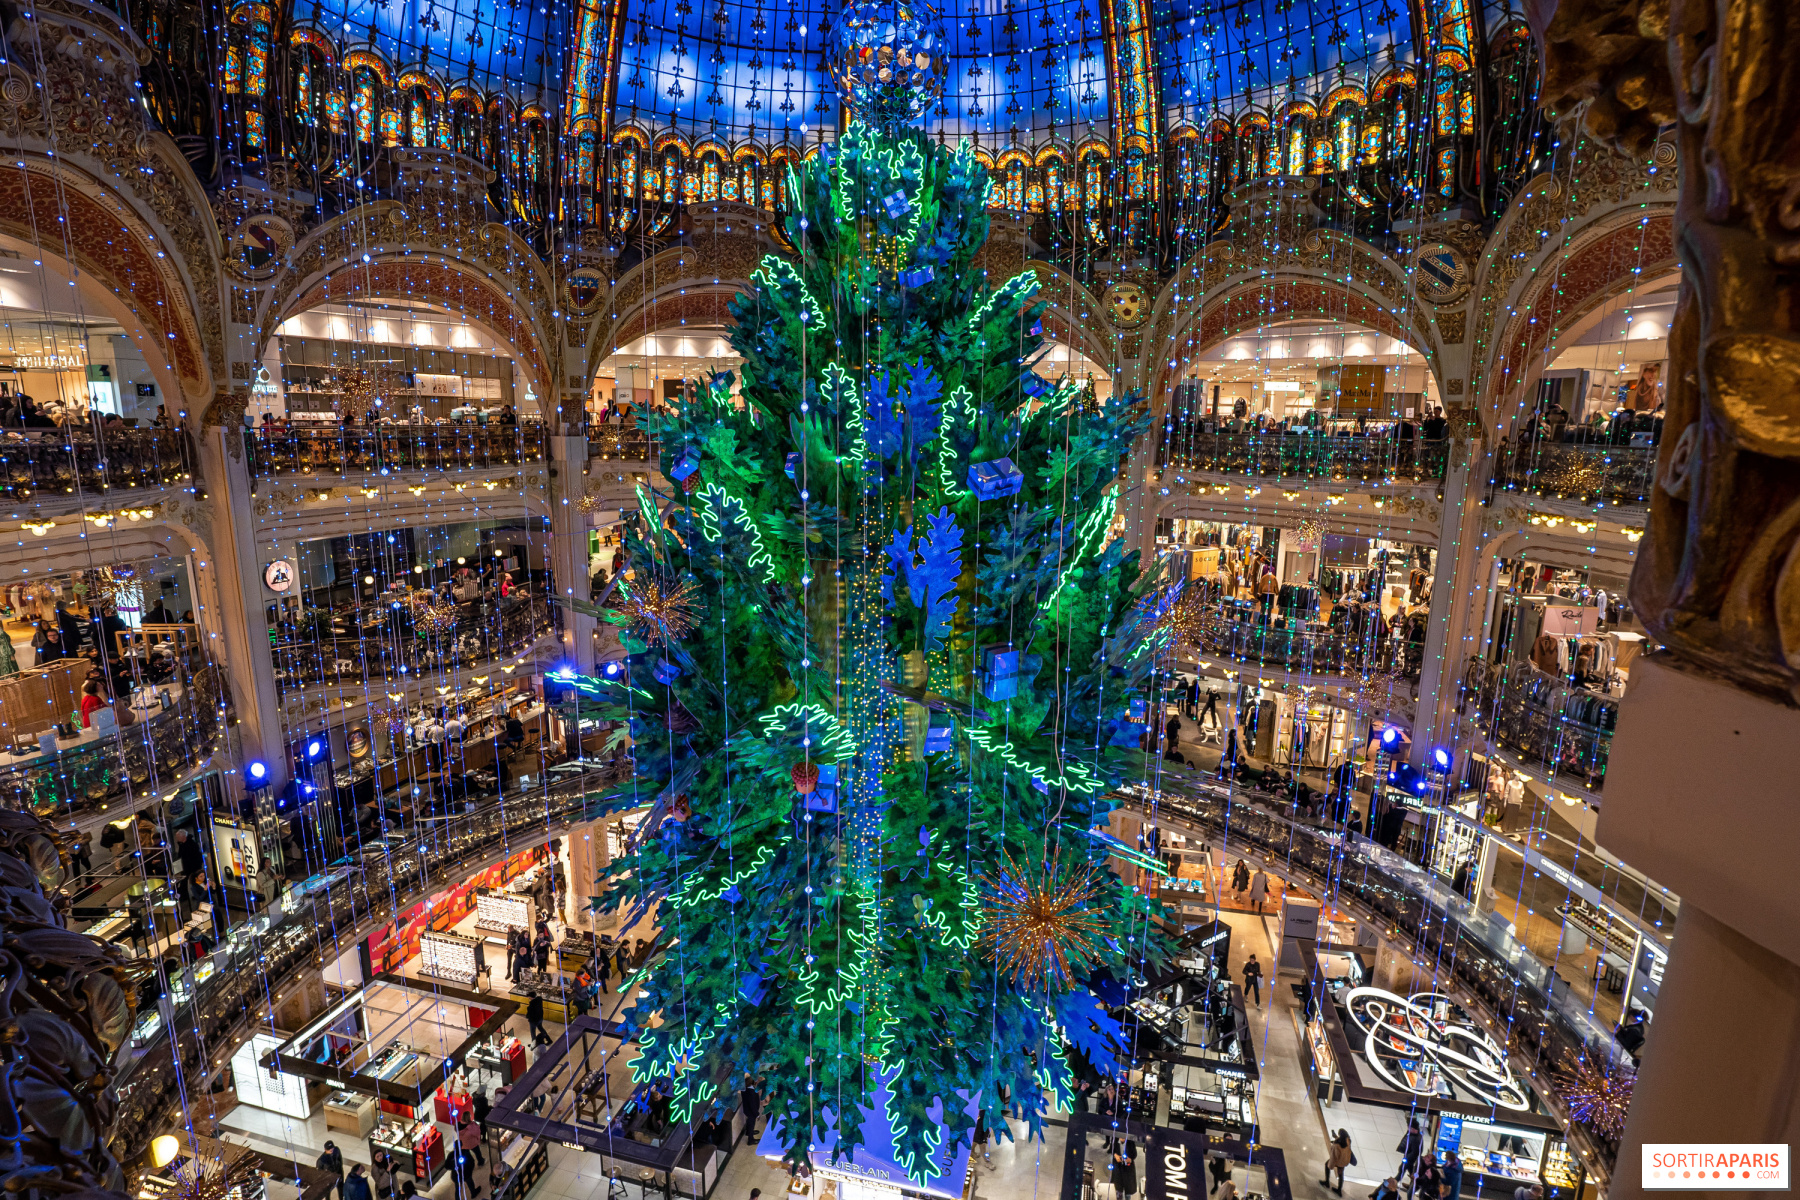 Paris workers disrupt Galeries Lafayette Christmas tree-lighting ceremony